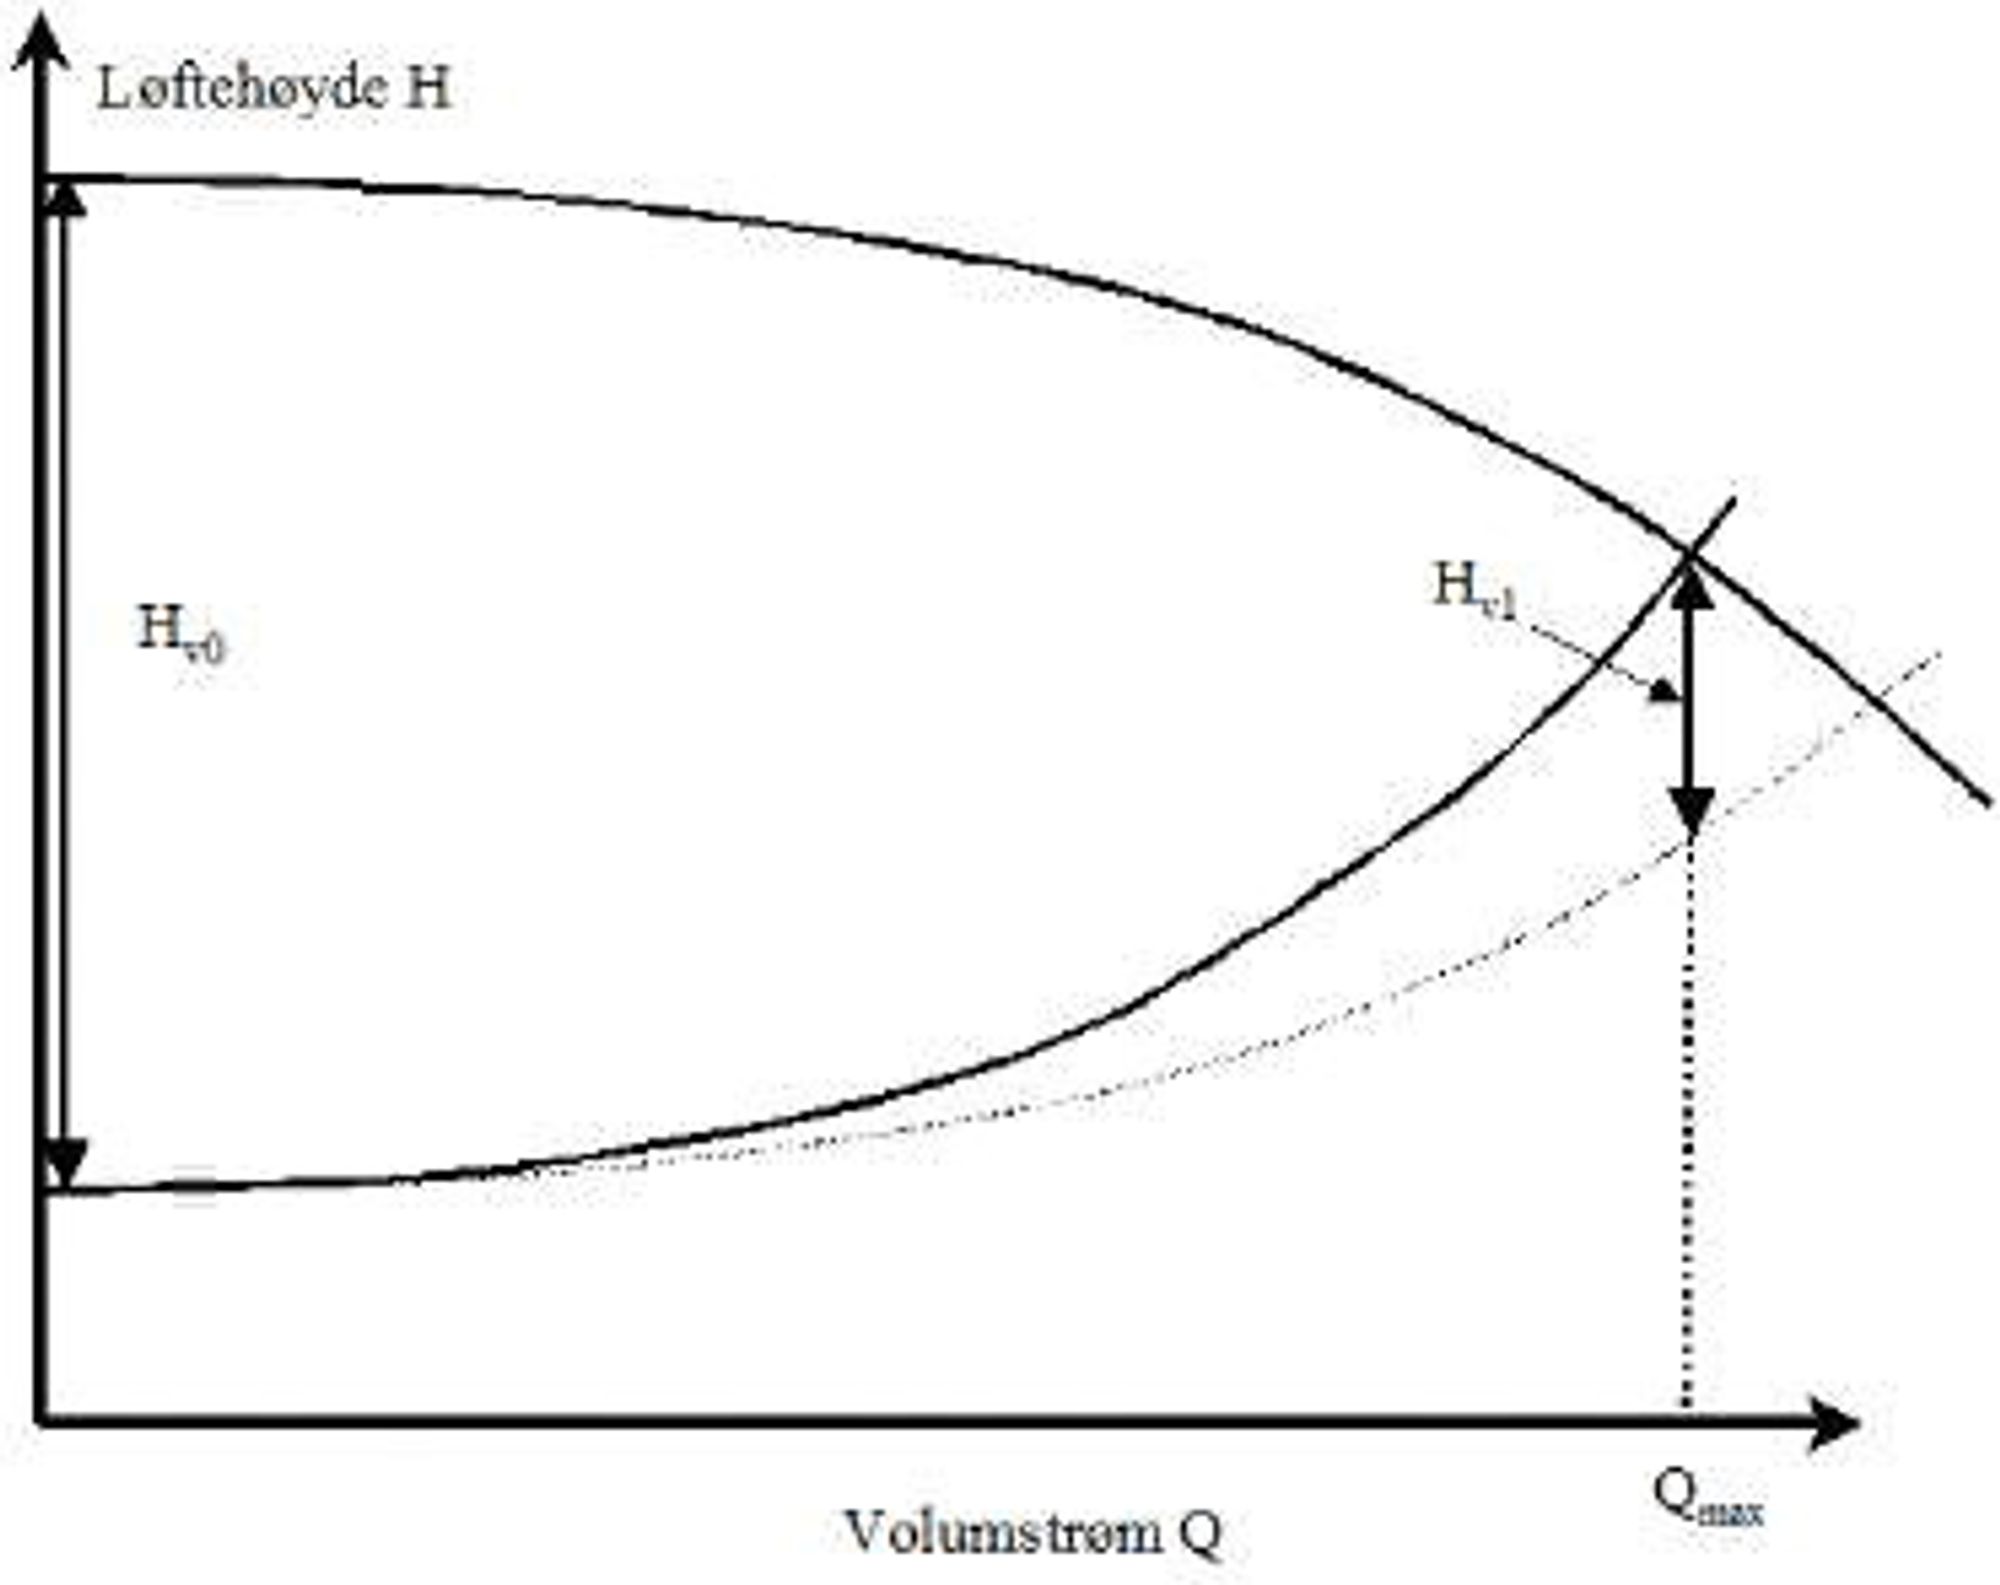 Sammenligning av trykkfallet ved maks. volumstrøm, Hv1,
med trykkfallet ved stengt ventil, Hv0.